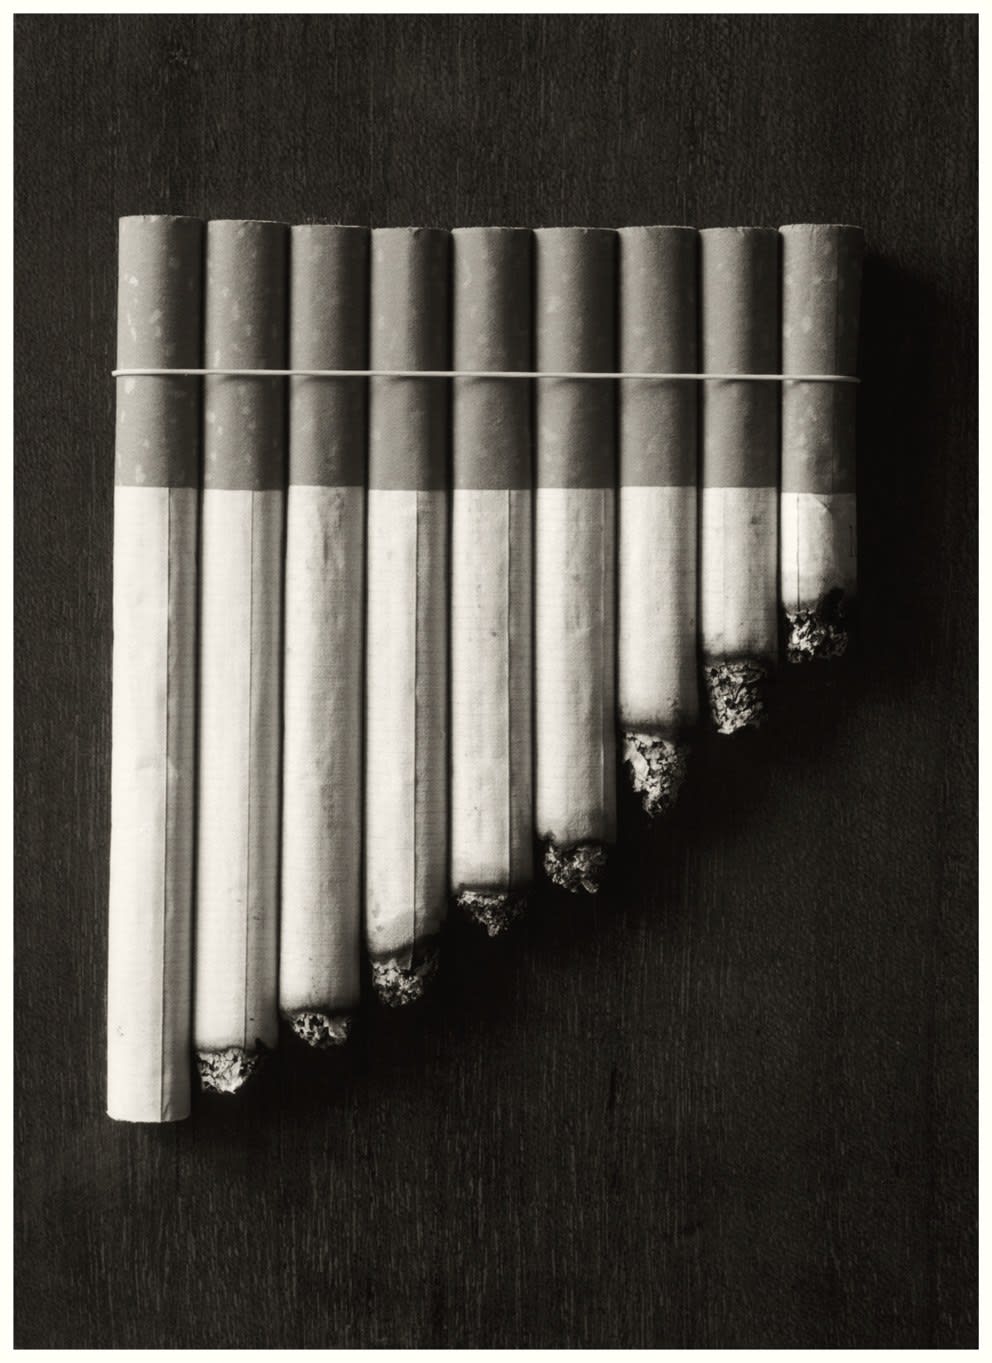 Chema Madoz, Cigarrillos Harmónica, 1996